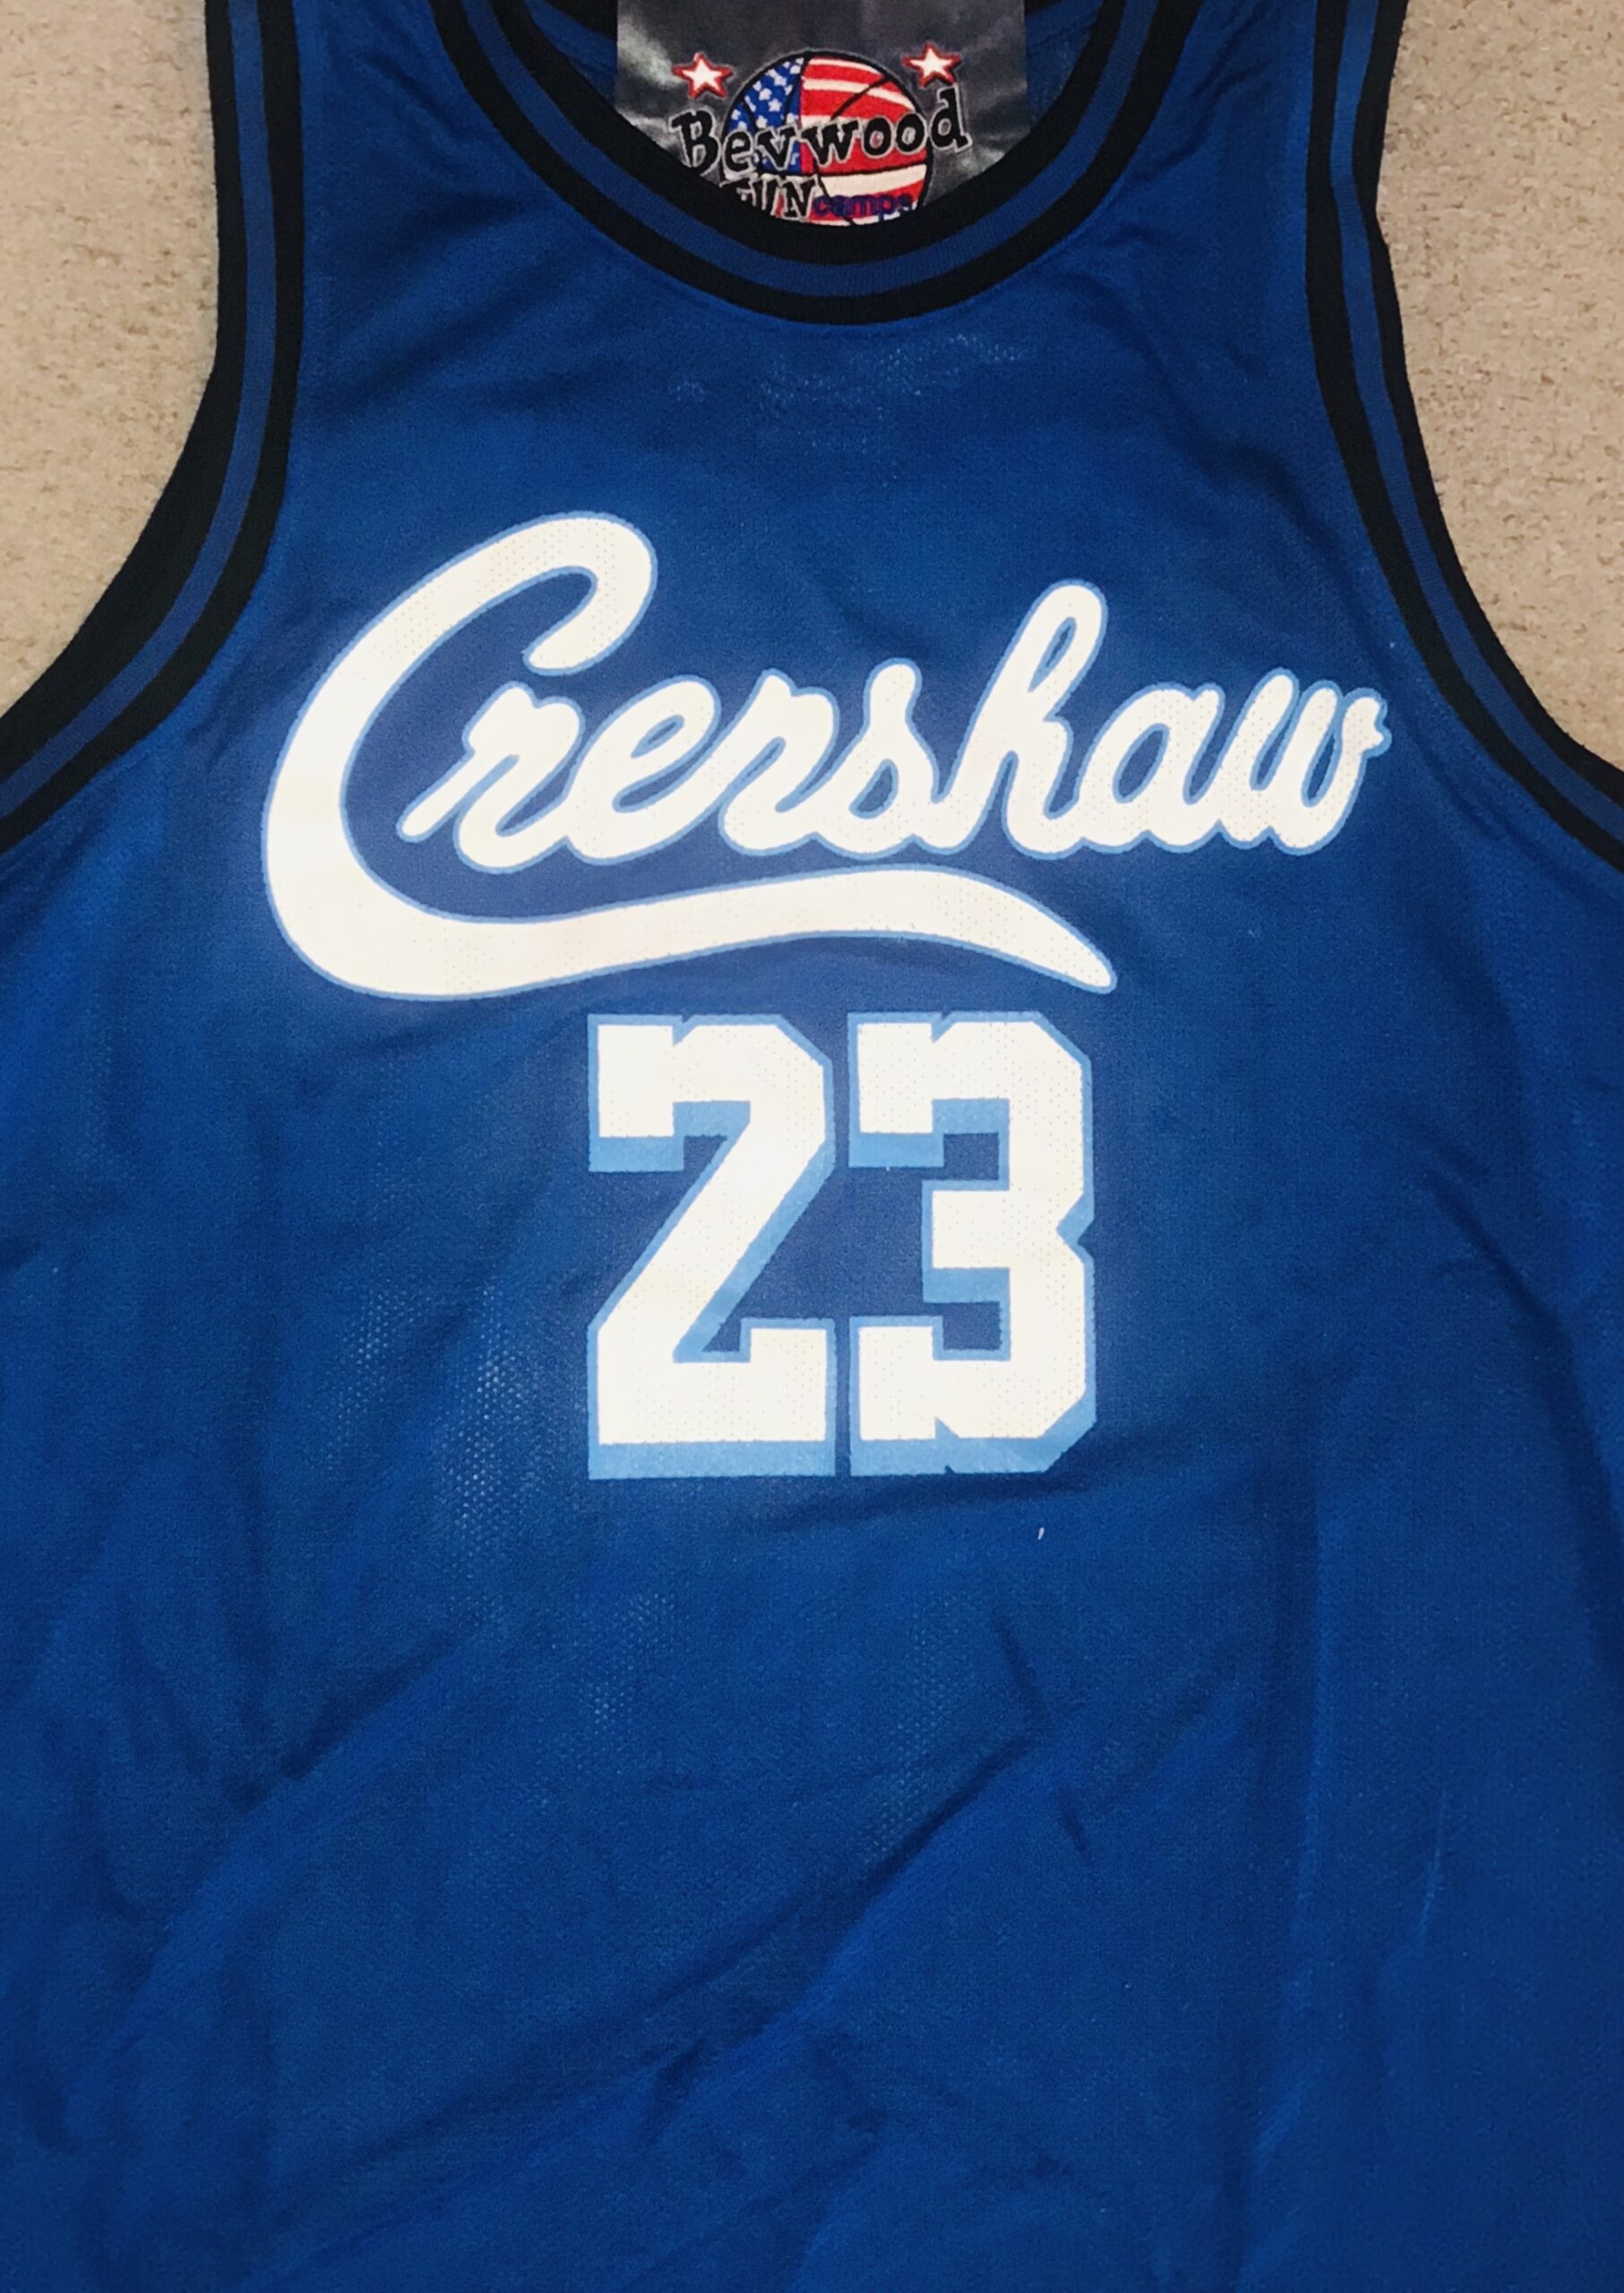 Crenshaw Lebron #23 Pro Basketball Jersey